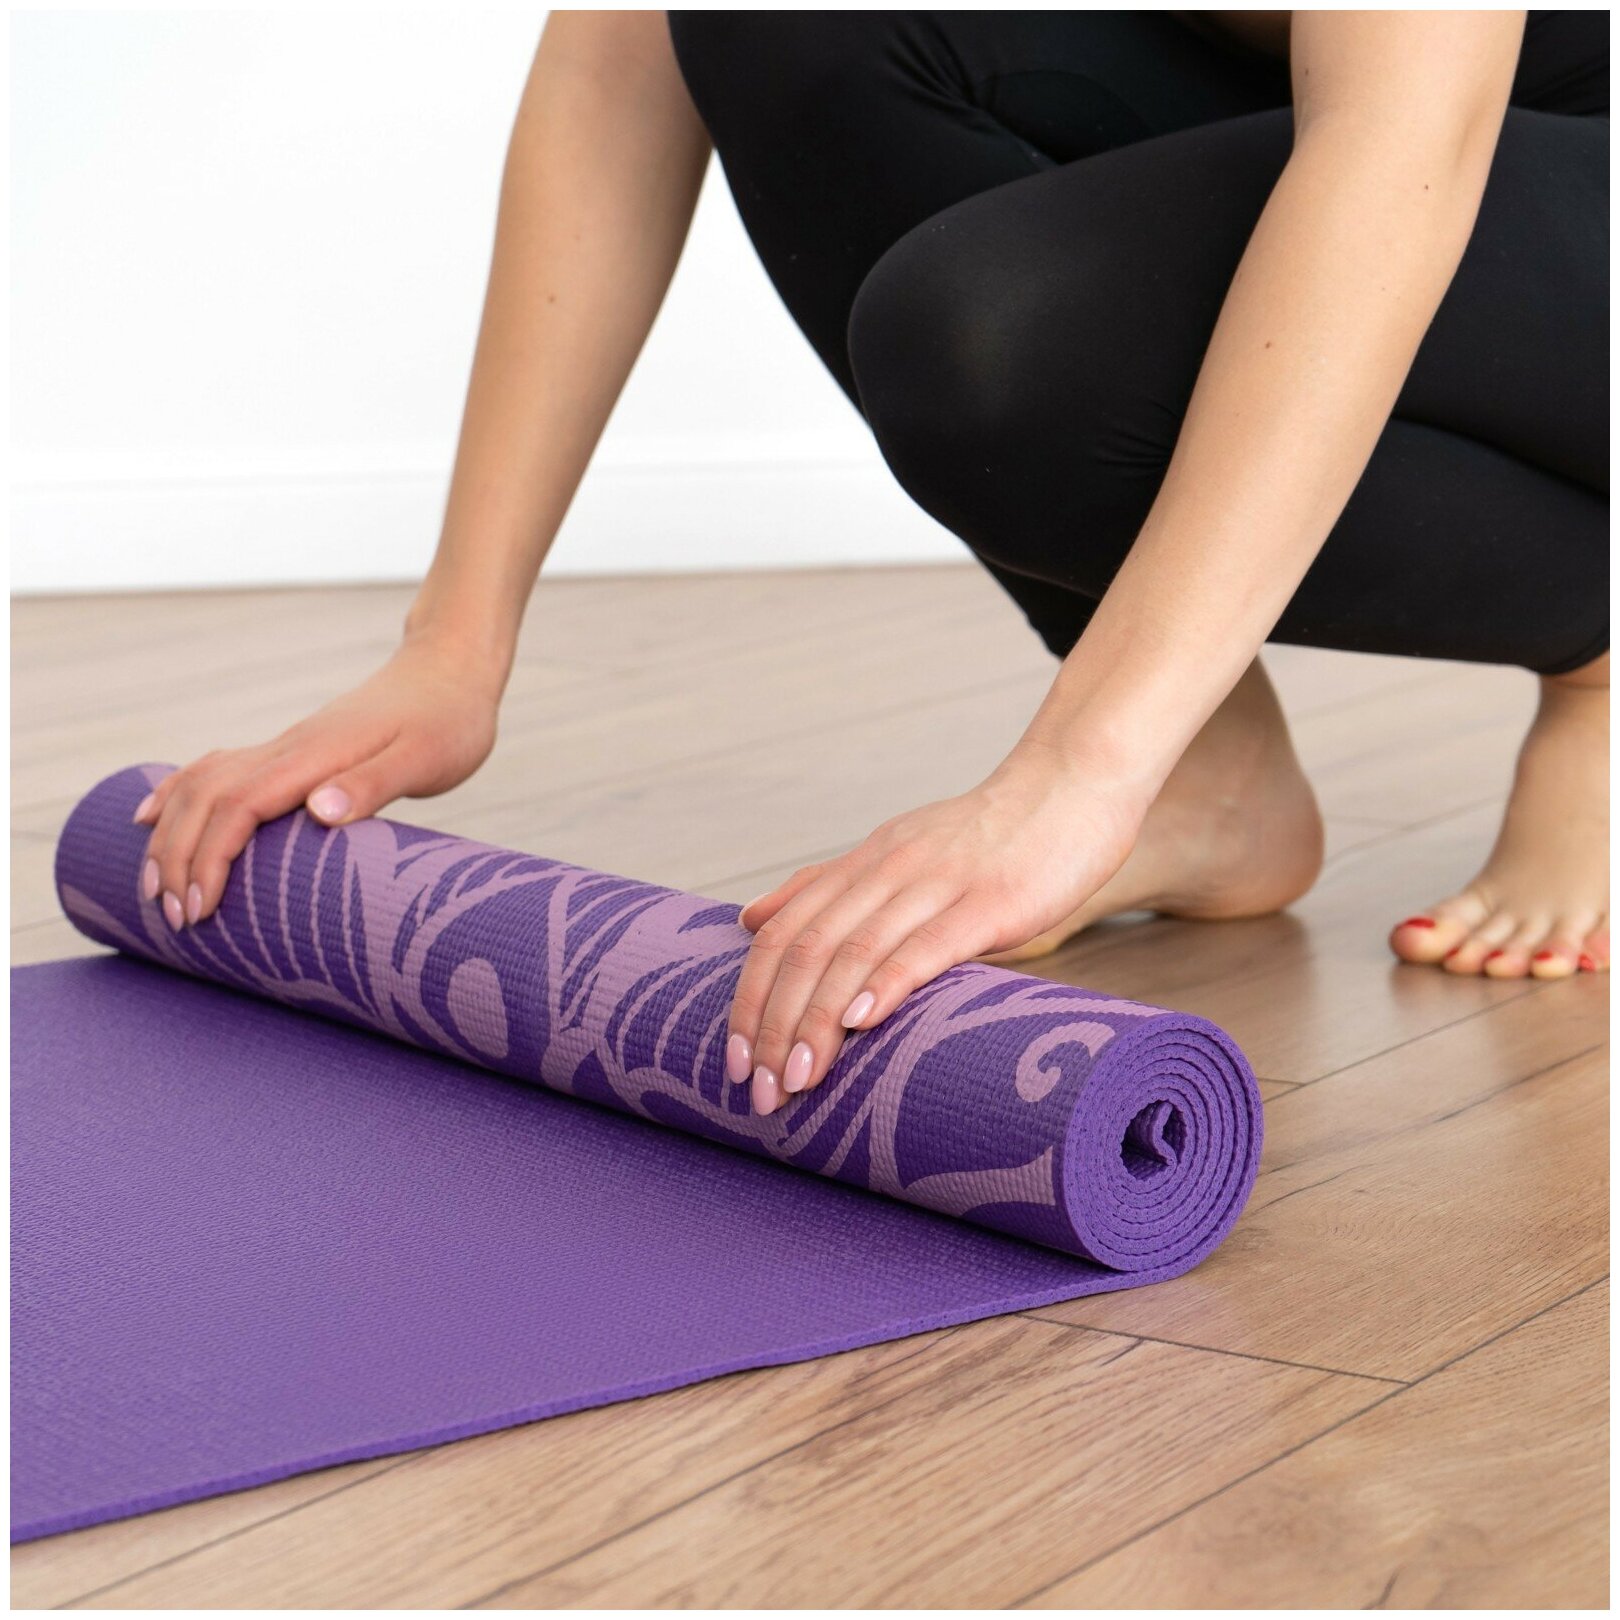 Коврик для йоги Sangh "Мандала", размеры 173 х 61 х 0,4 см, цвет фиолетовый